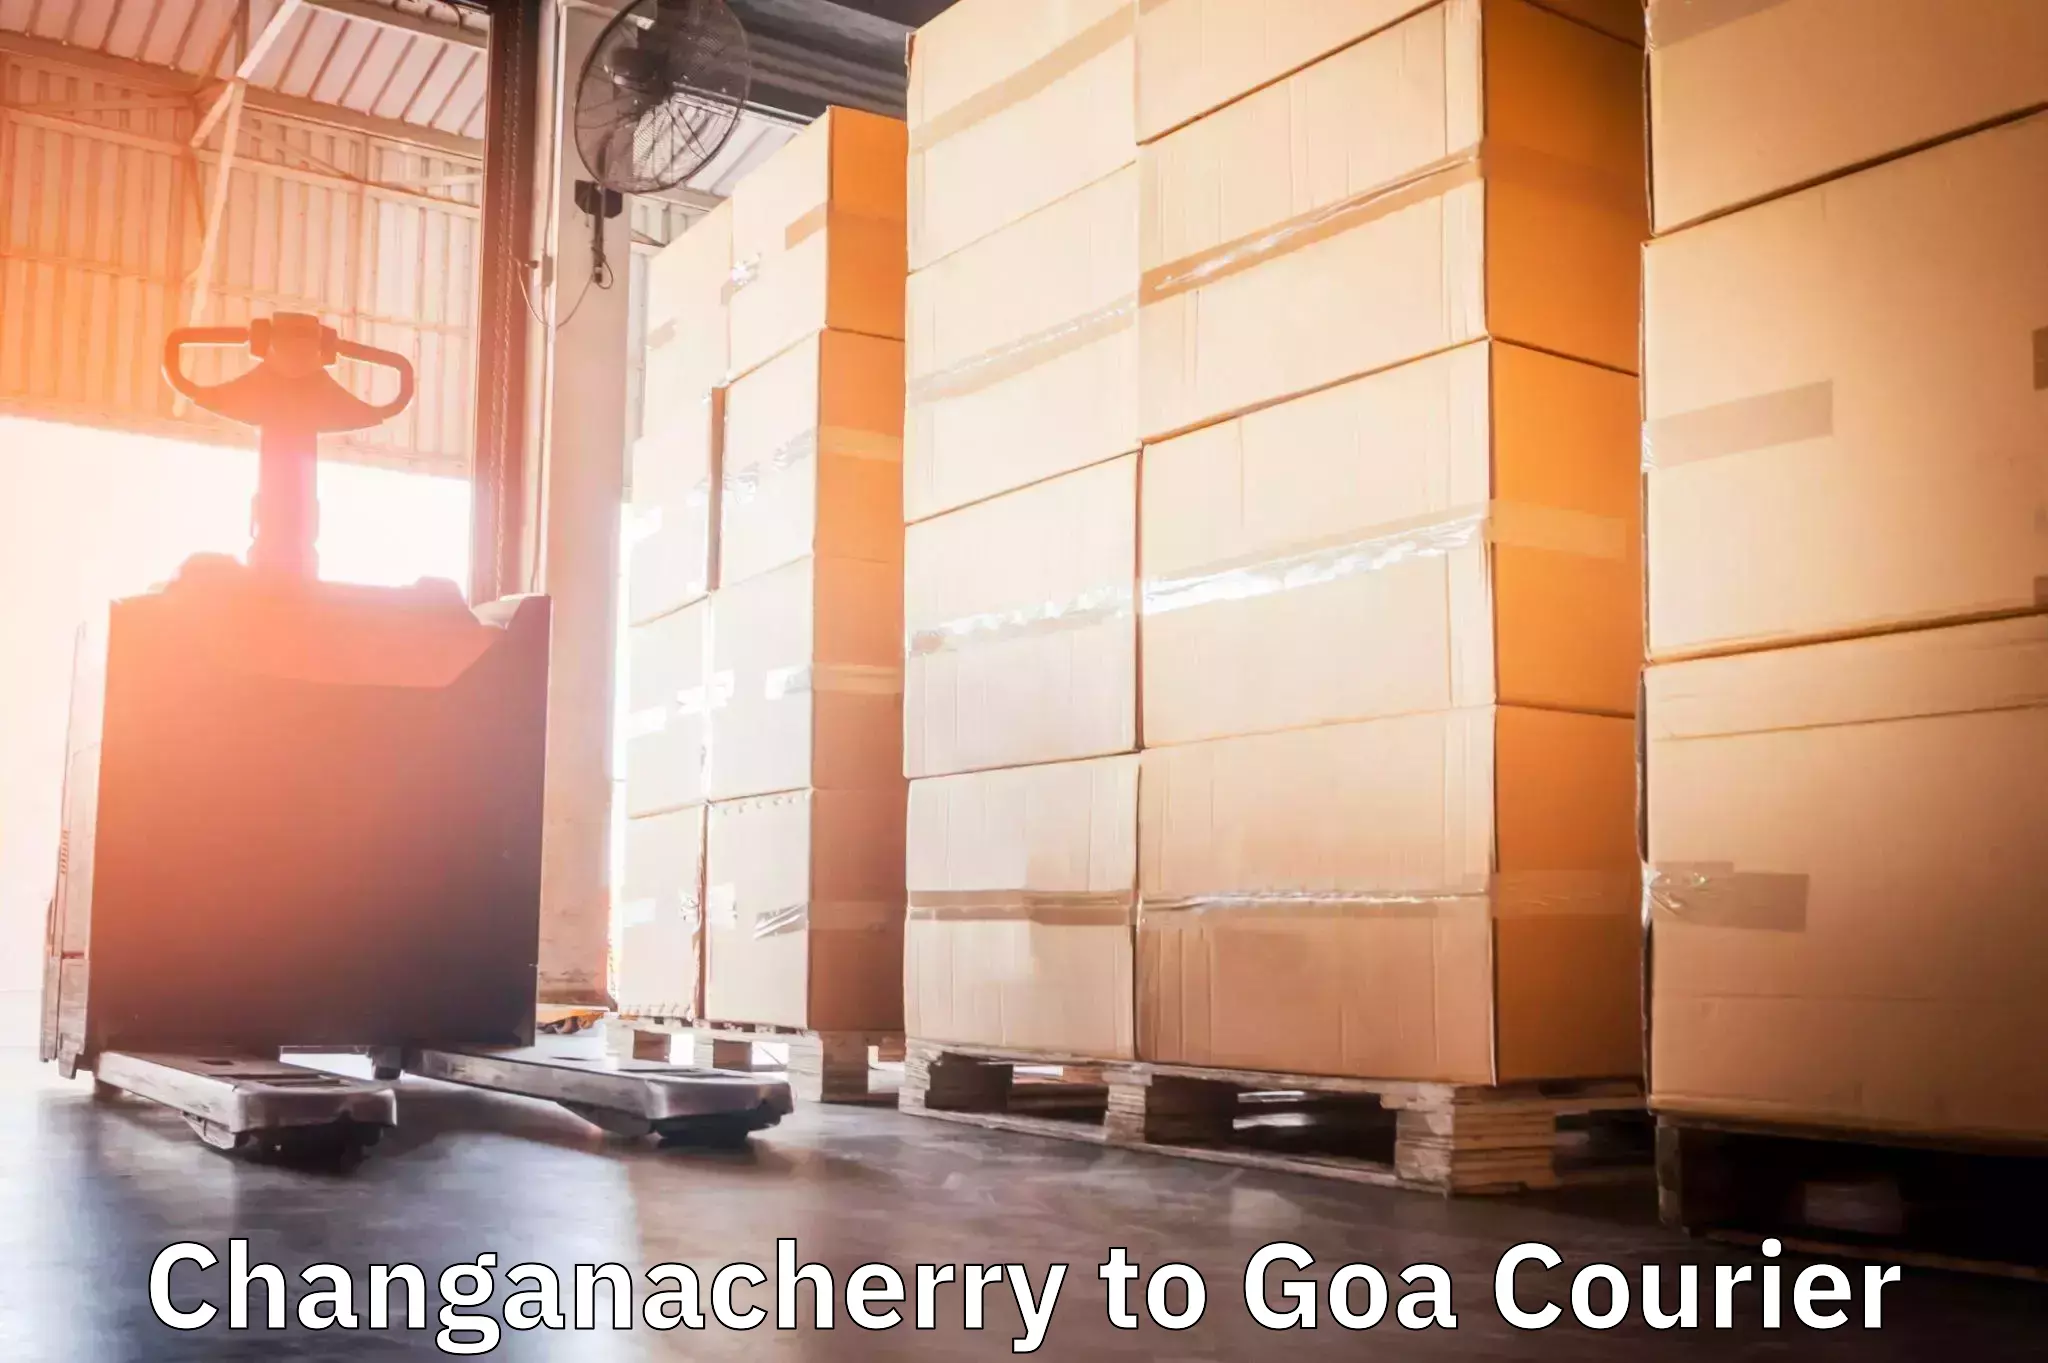 Courier service comparison Changanacherry to Goa